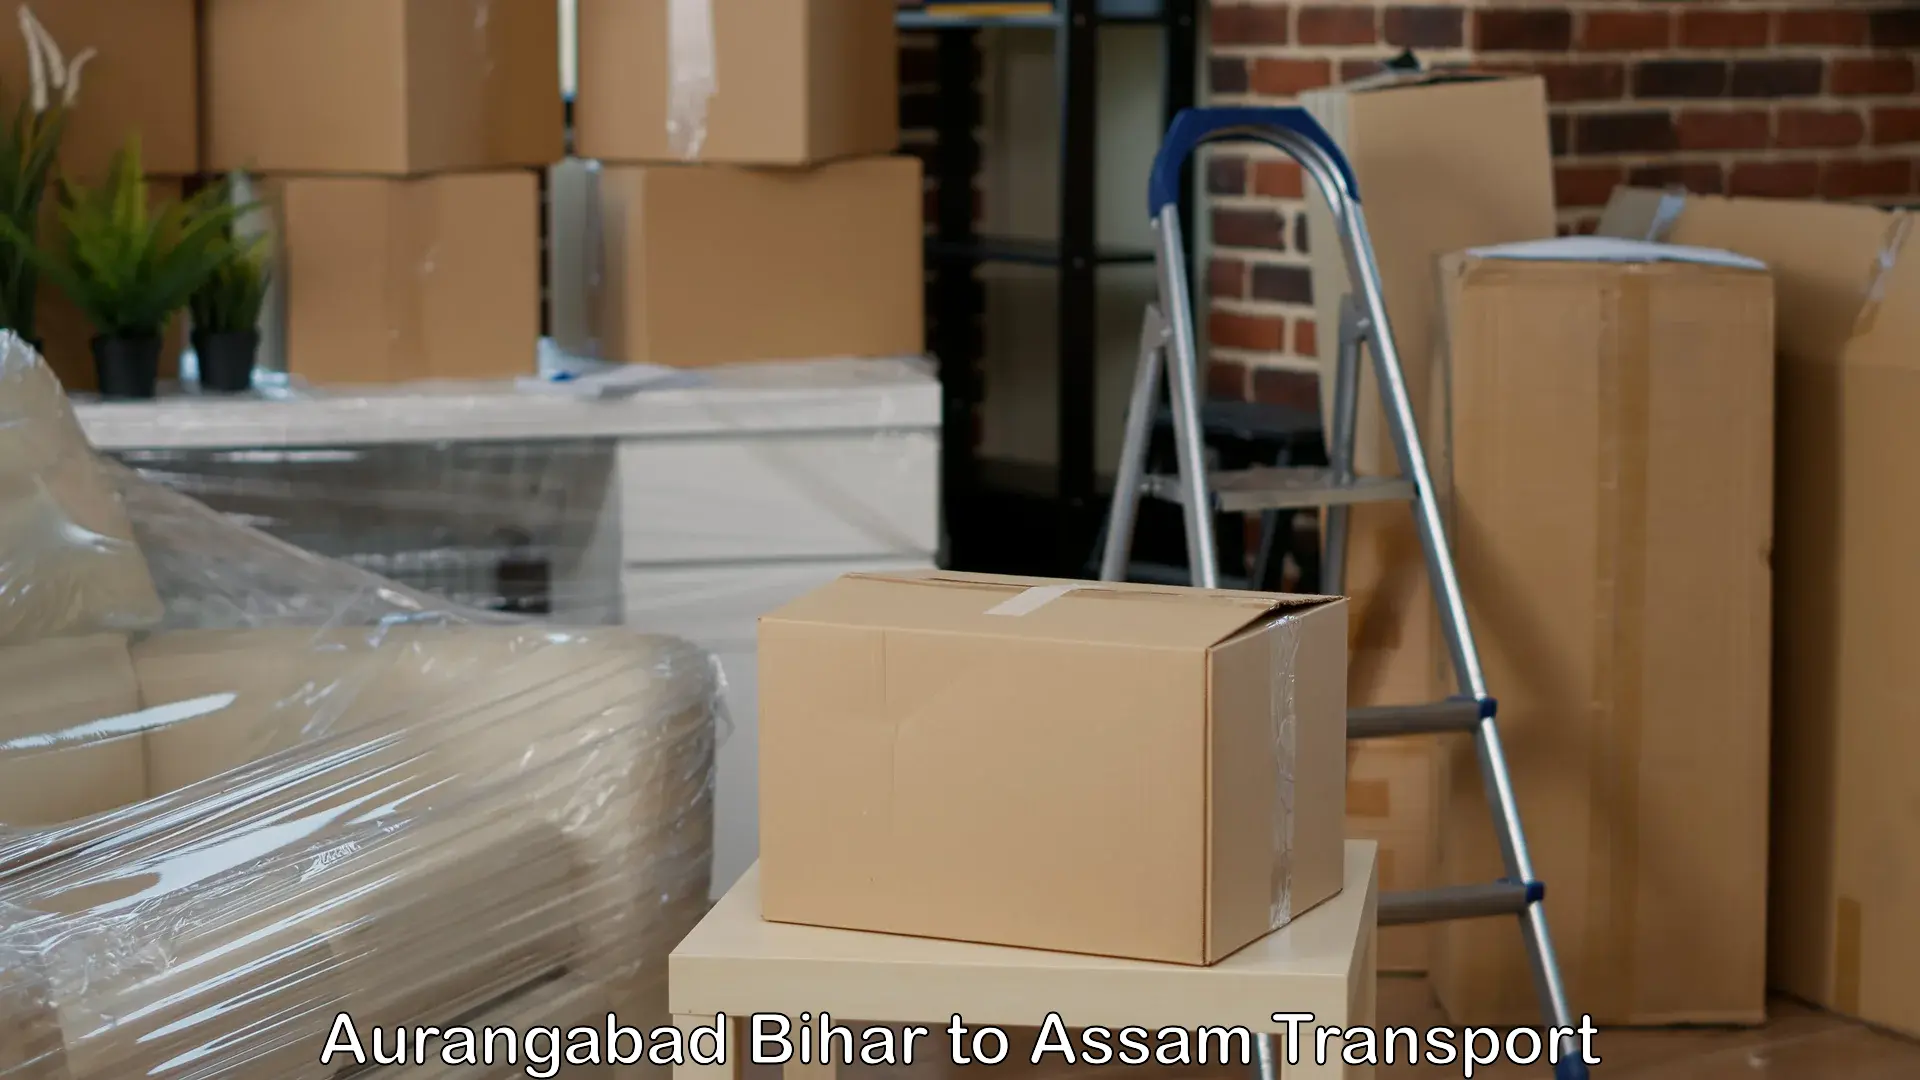 Transport in sharing Aurangabad Bihar to Bhaga